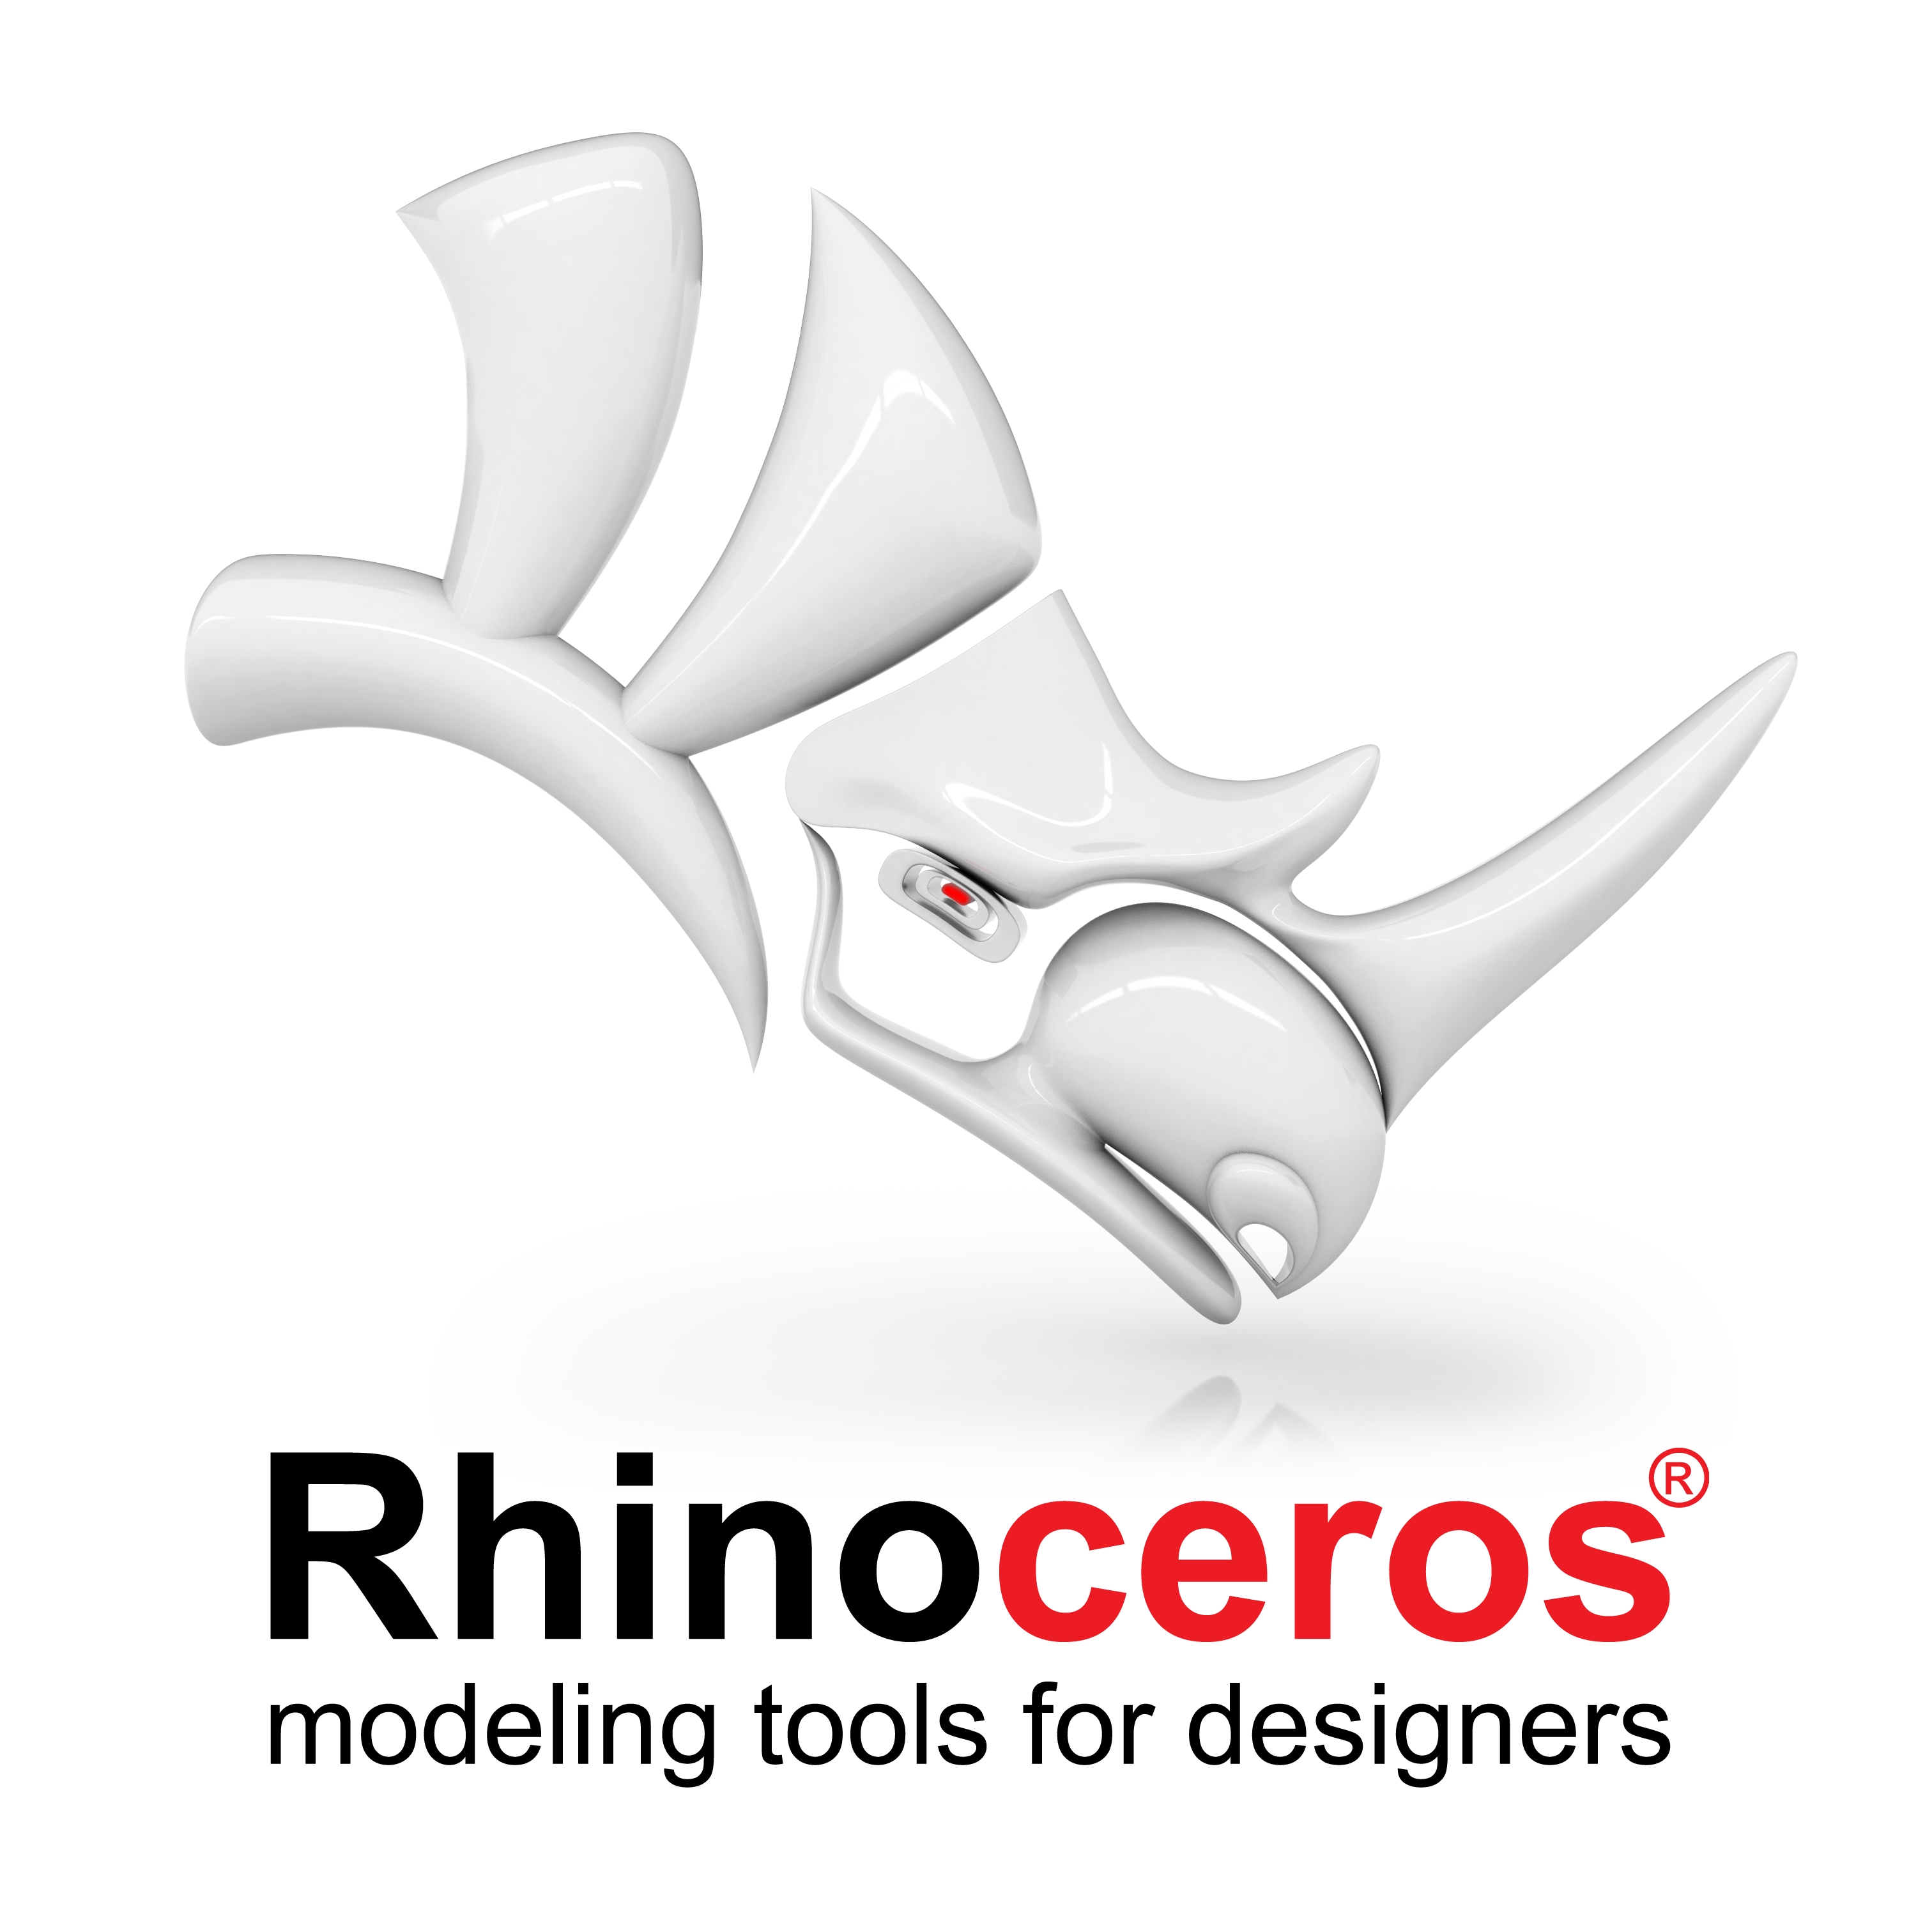 rhino for mac 5 license crack